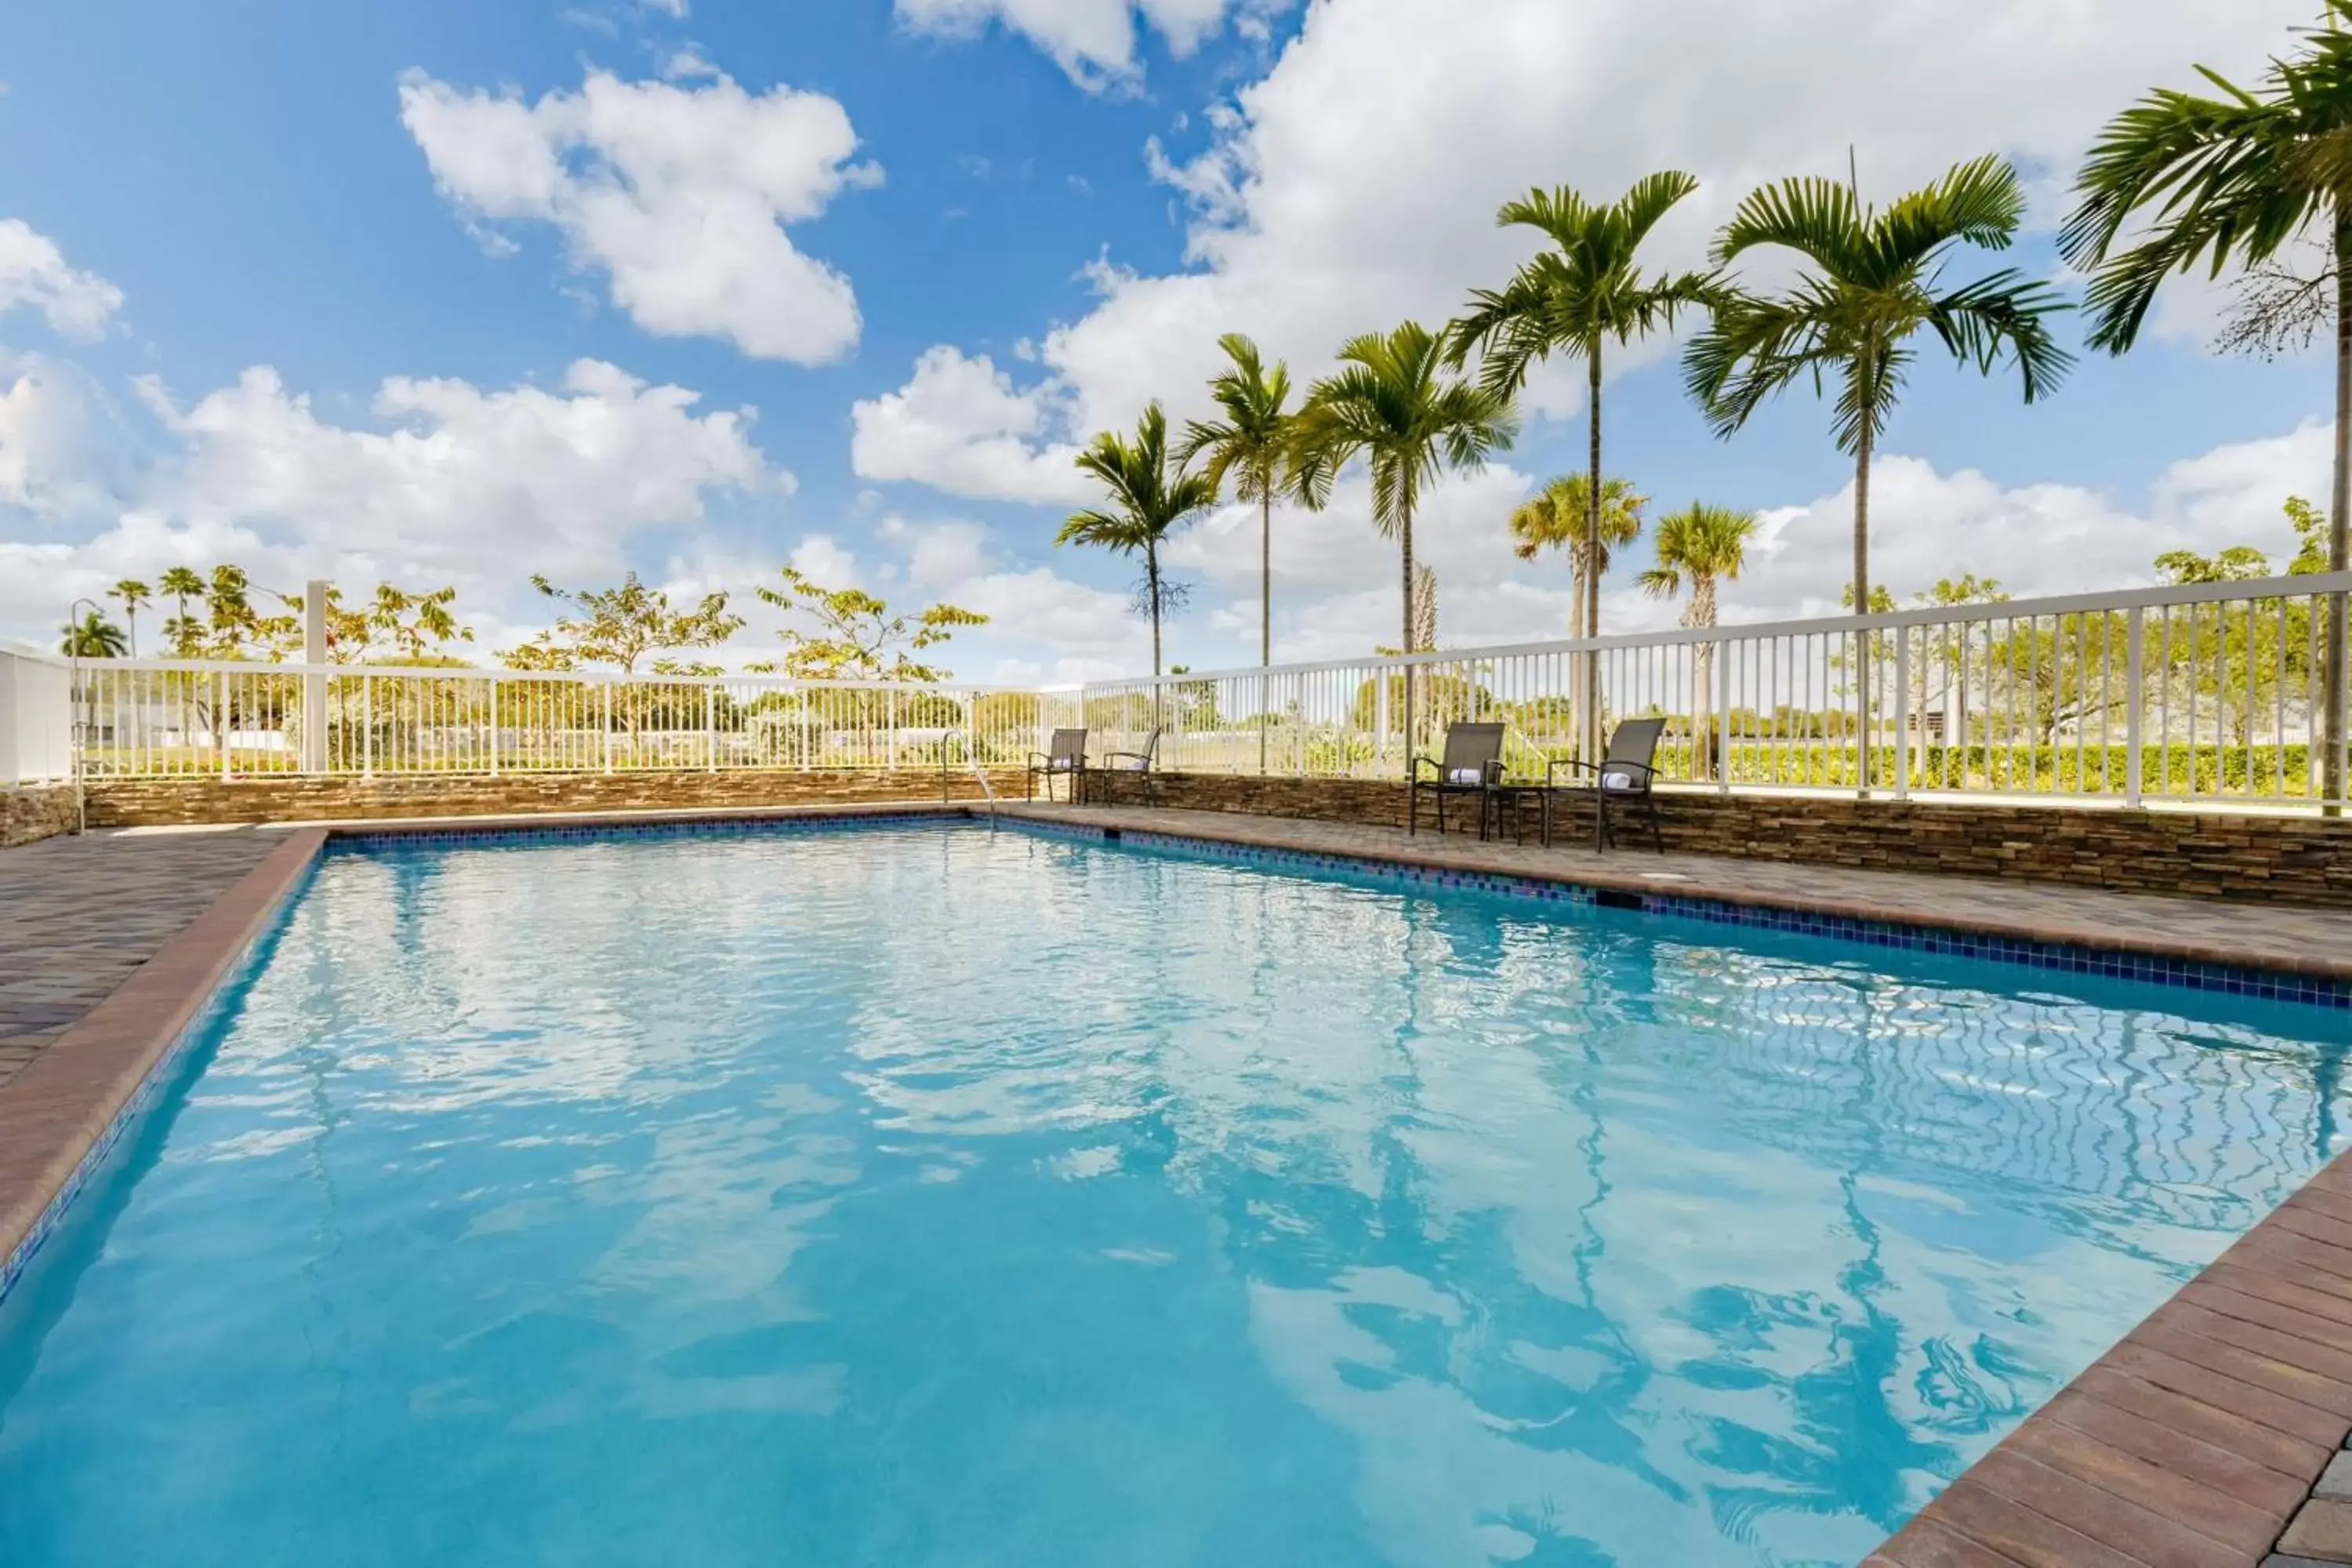 Swimming Pool in Fairfield Inn & Suites Homestead Florida City